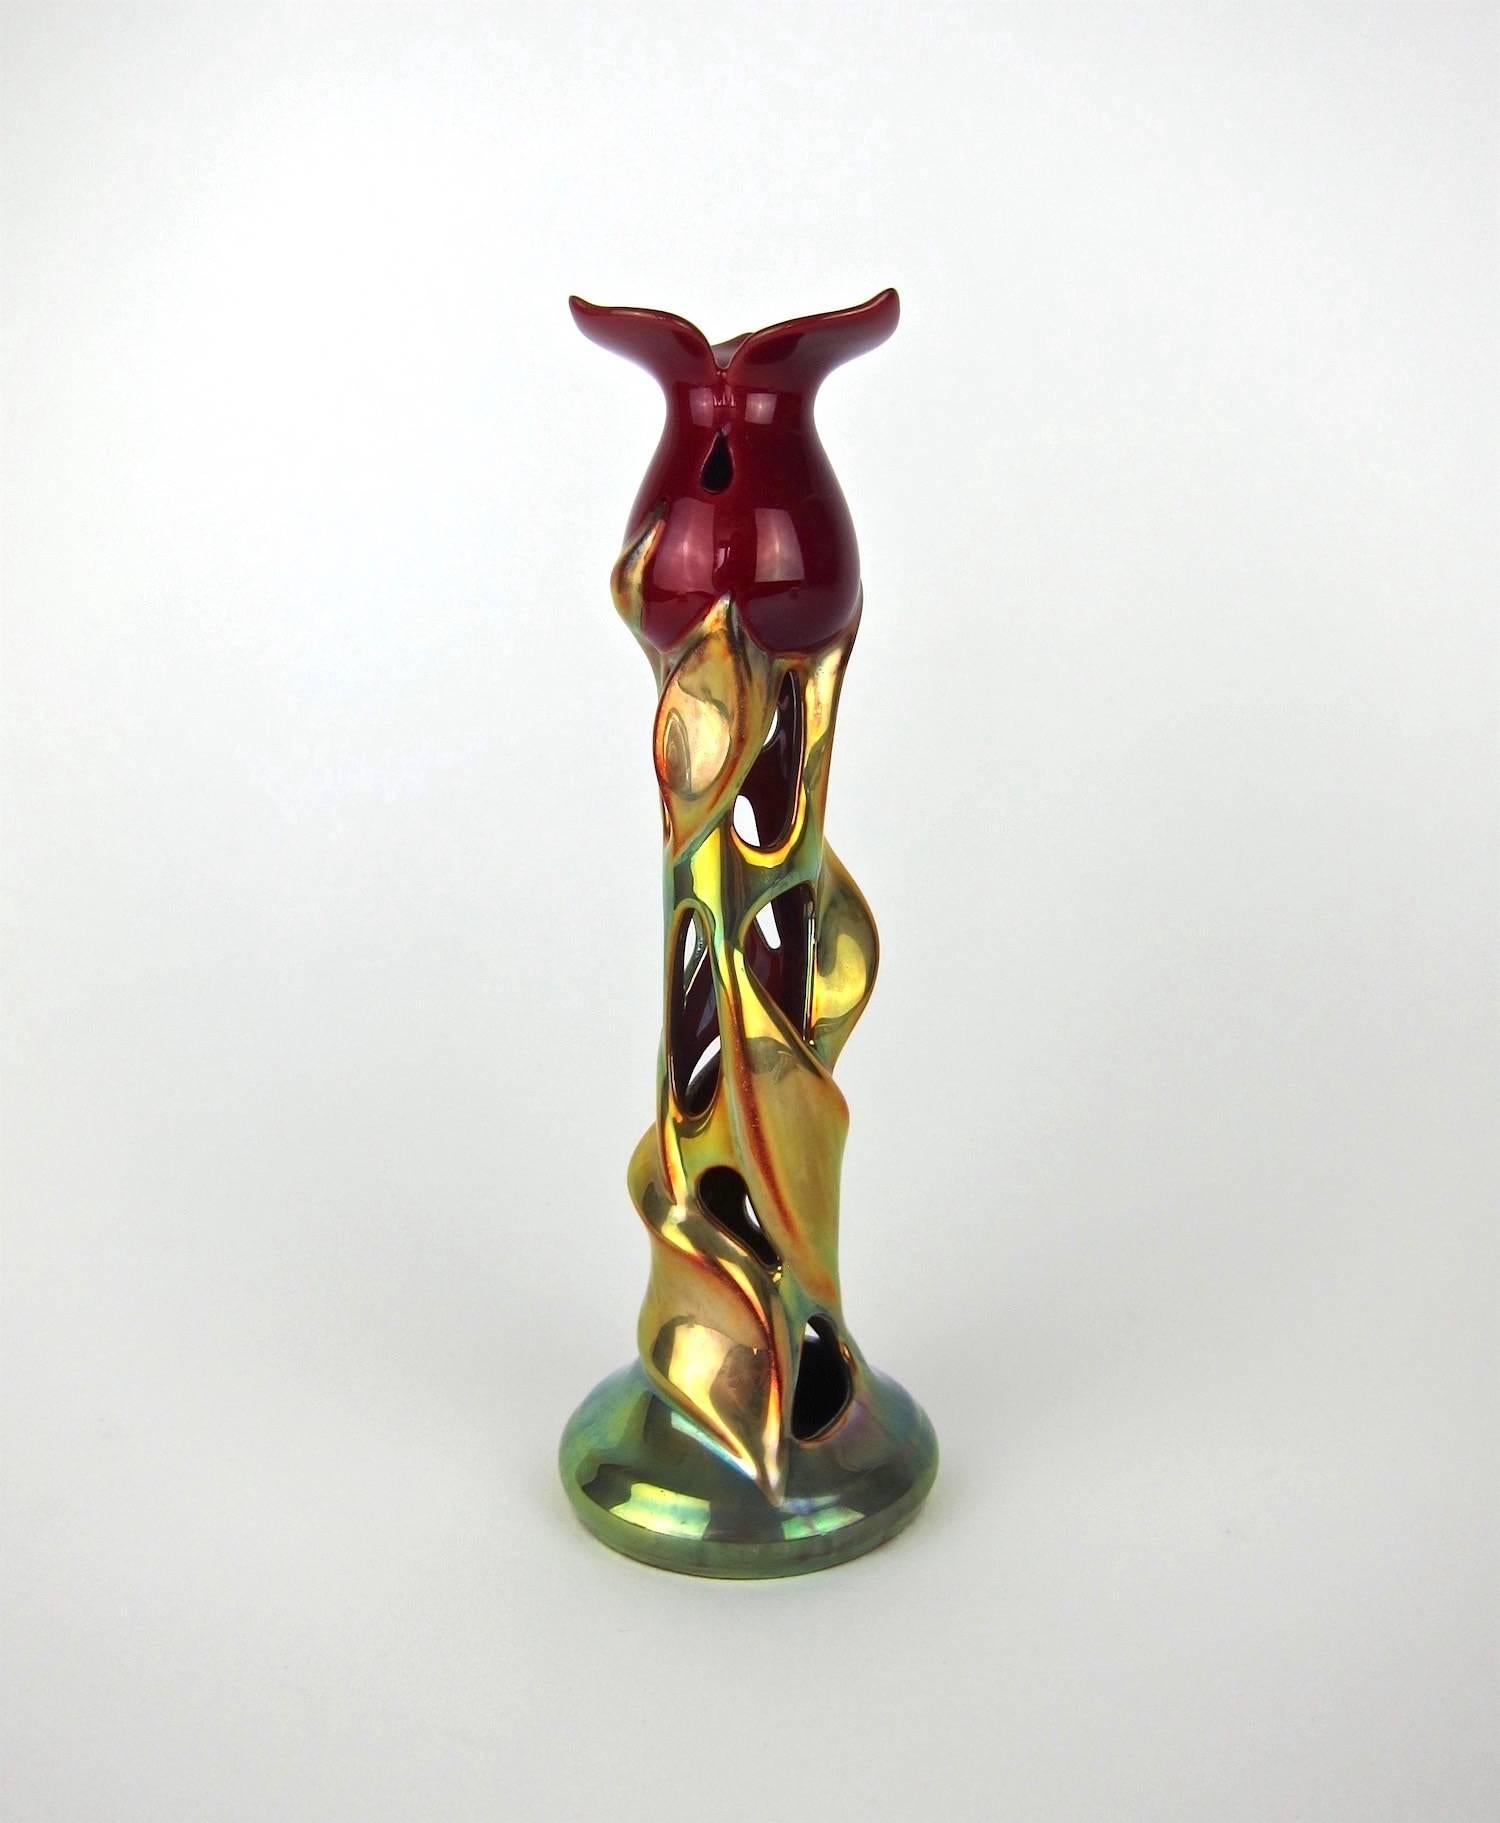 20th Century Zsolnay Art Nouveau Porcelain Tulip Candlestick with Eosin Glaze